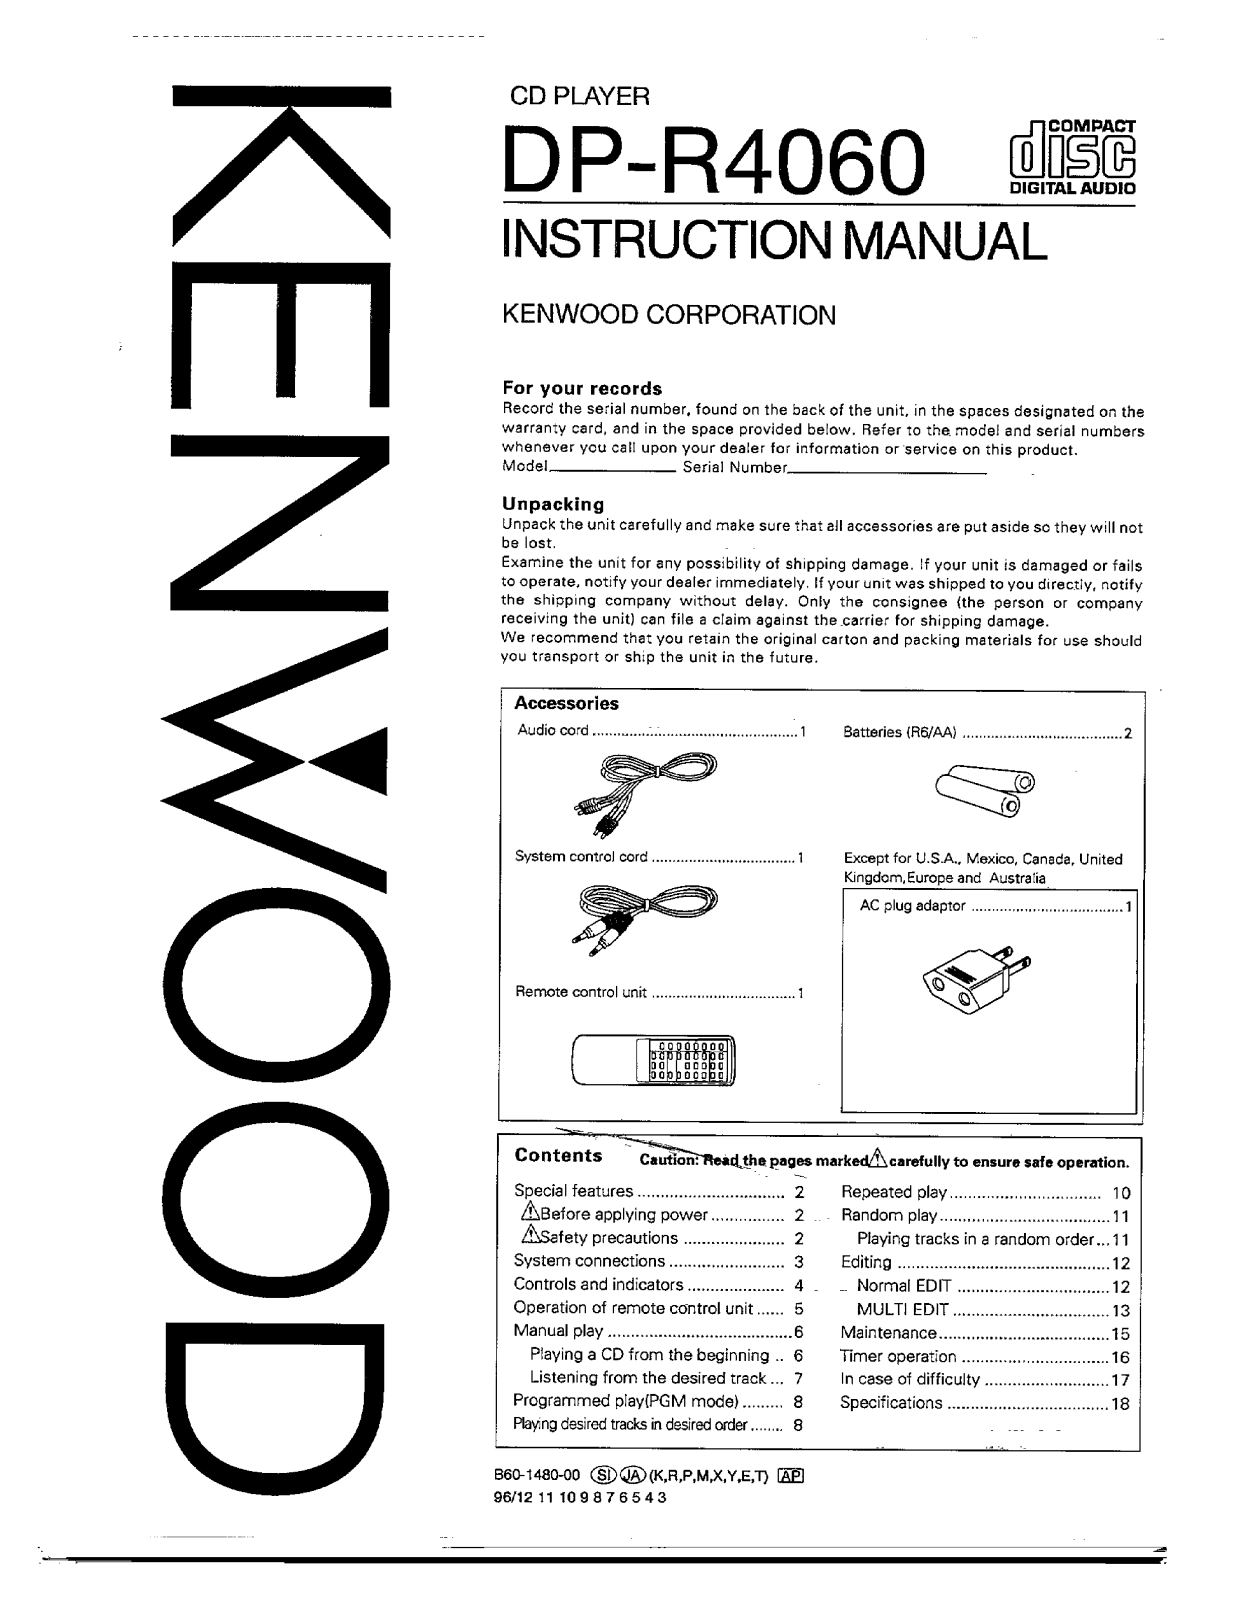 Kenwood DP-R4060 Owner's Manual